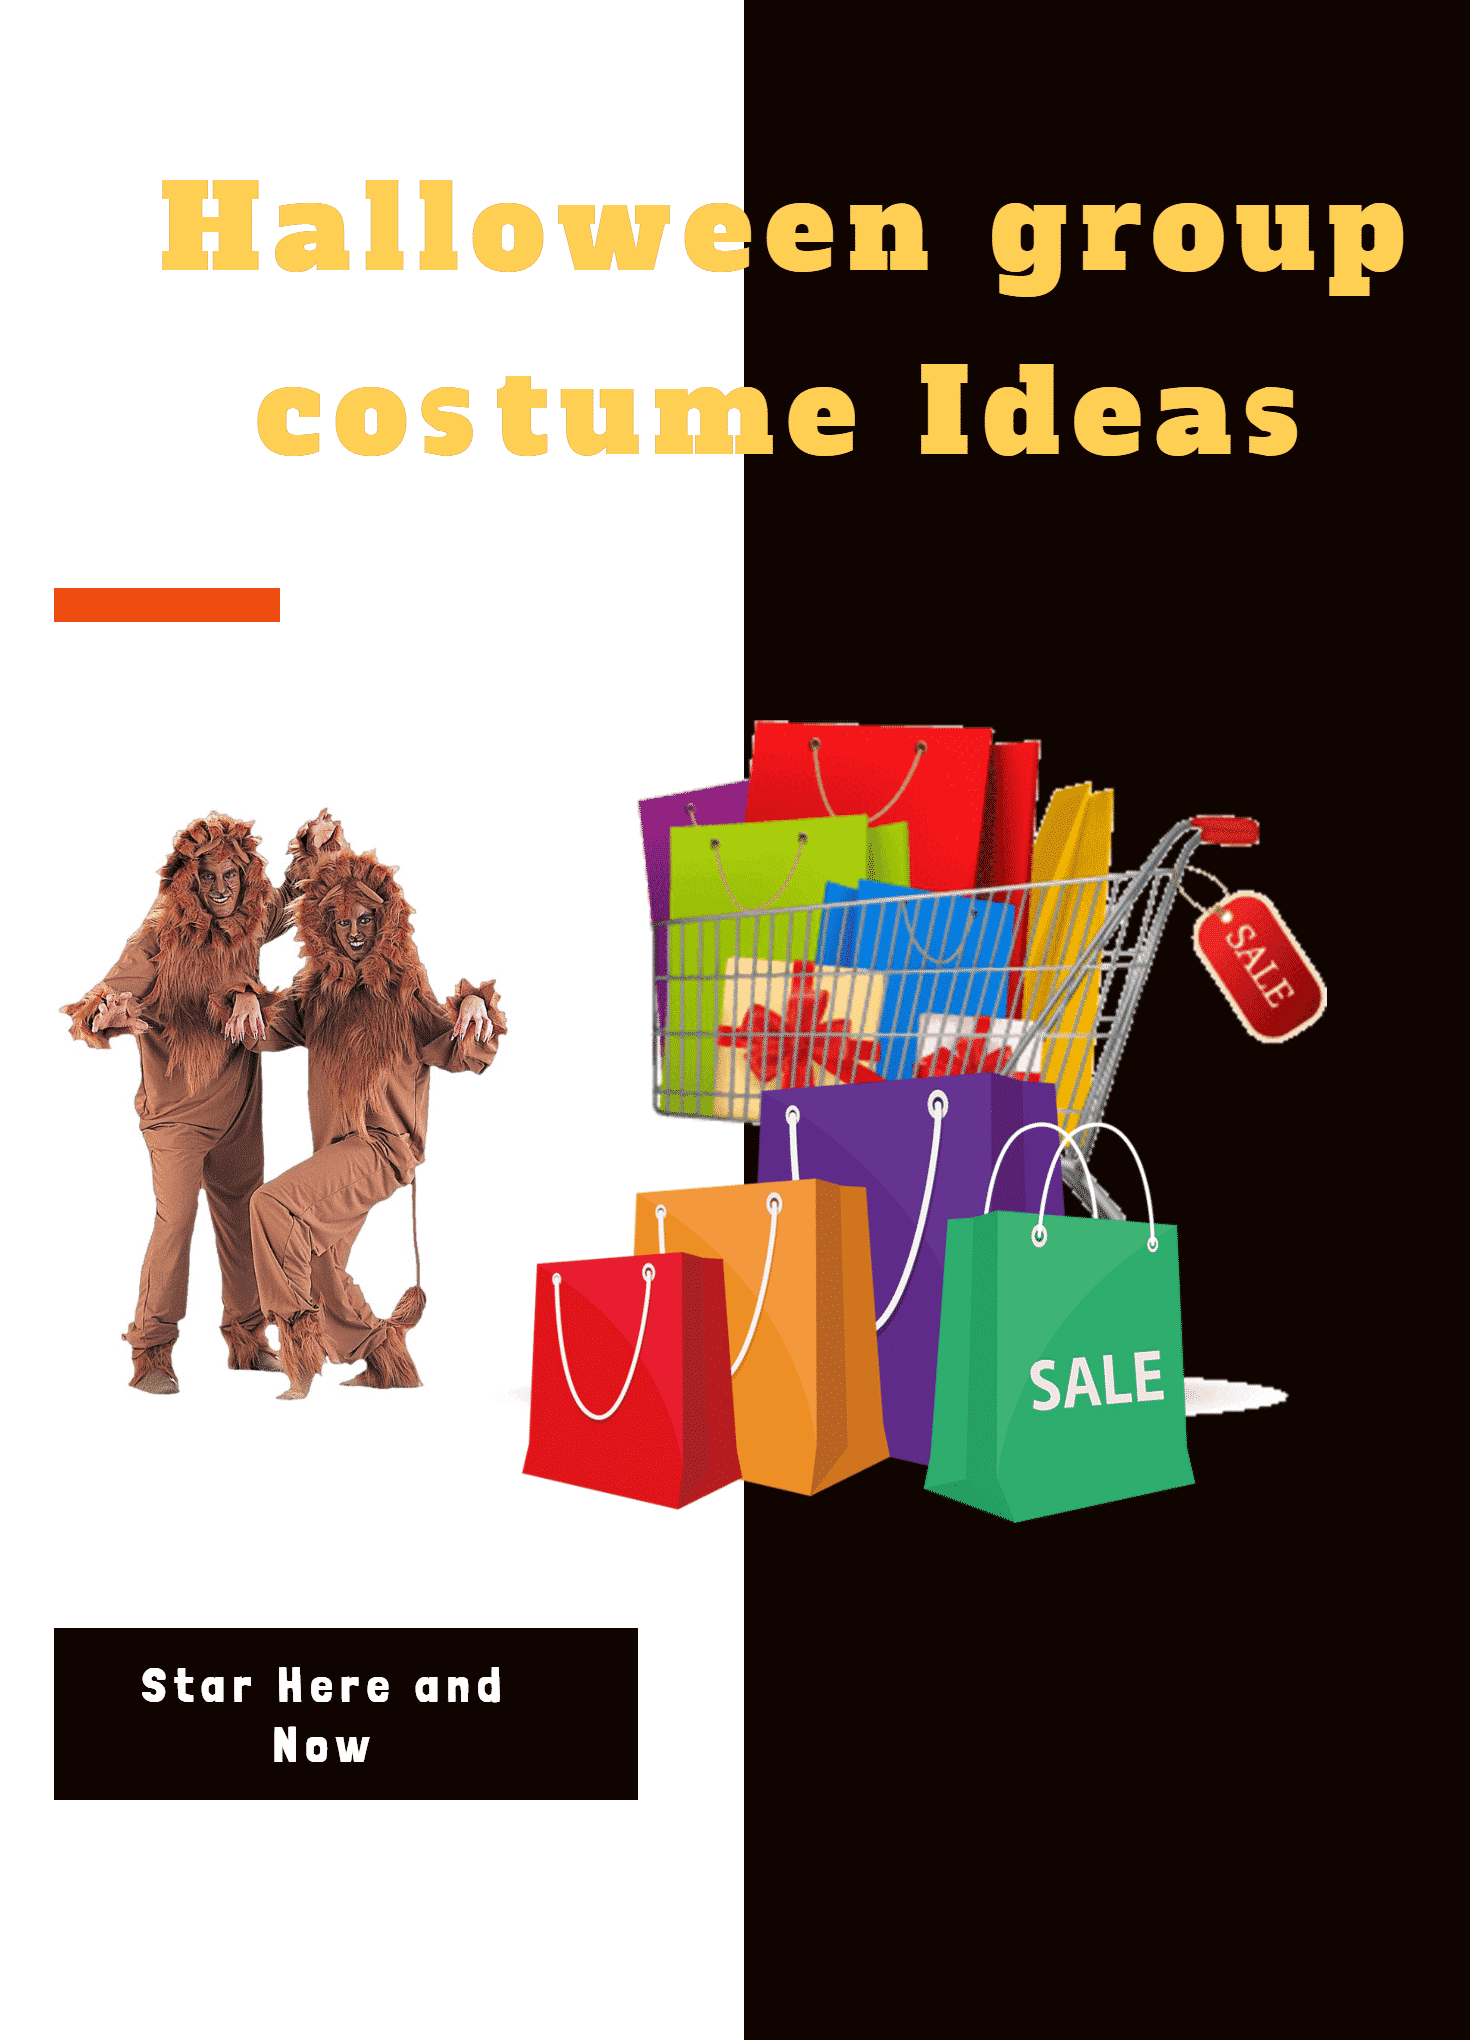 Halloween group costume ideas